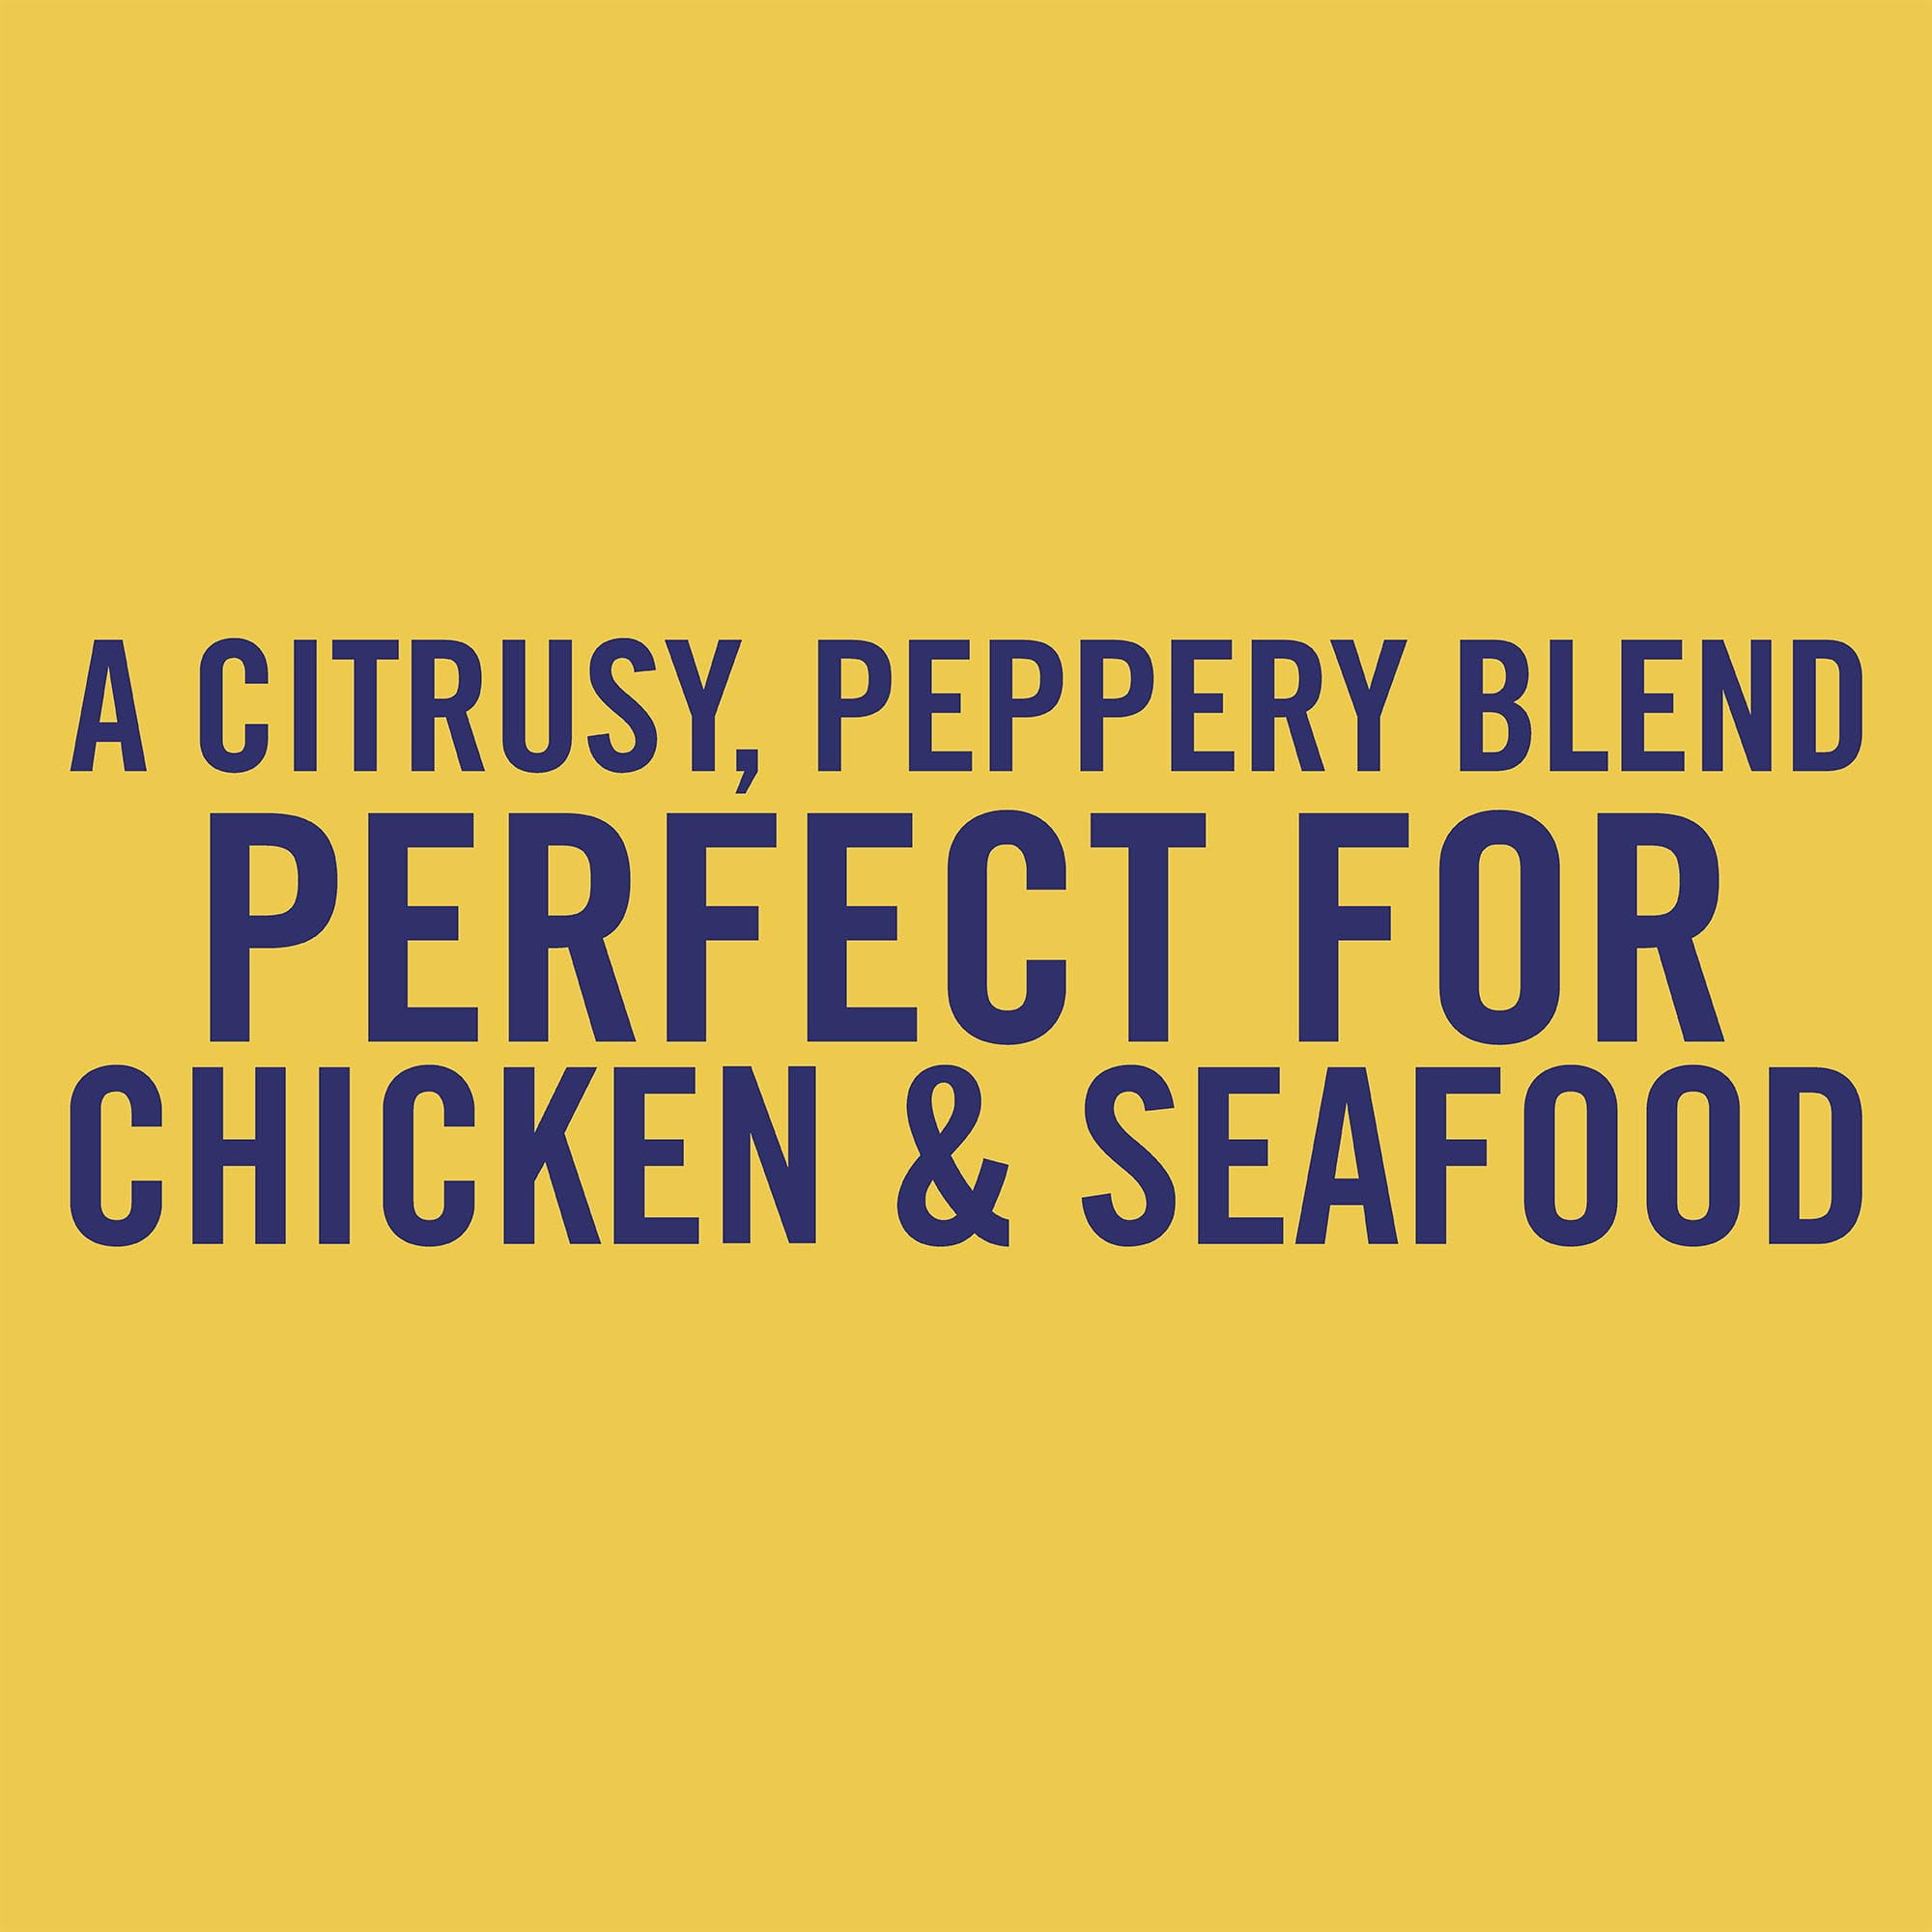 McCormick Perfect Pinch Lemon Pepper Seasoning, 5.75 Oz, Salt, Spices &  Seasonings